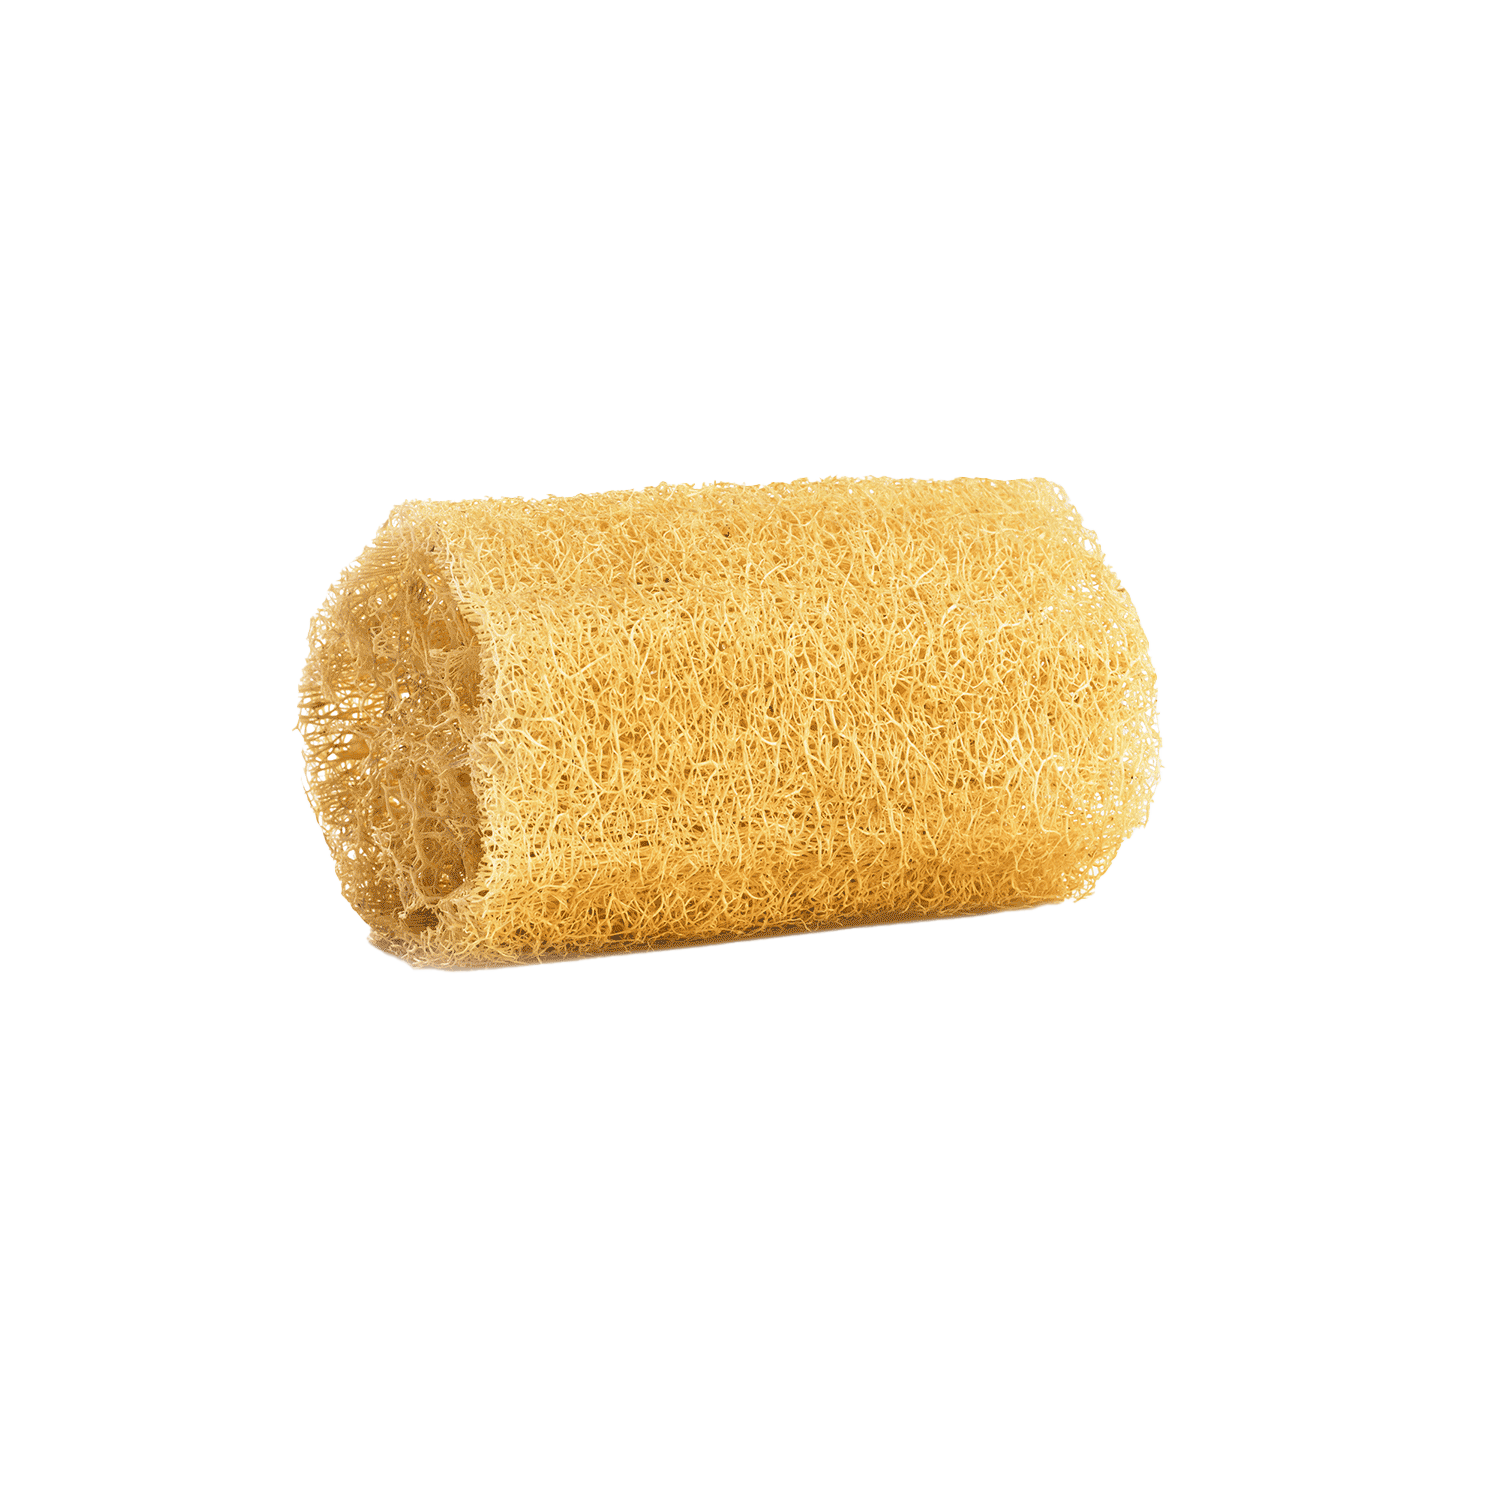 Small Loofah Sponge (3 pack)